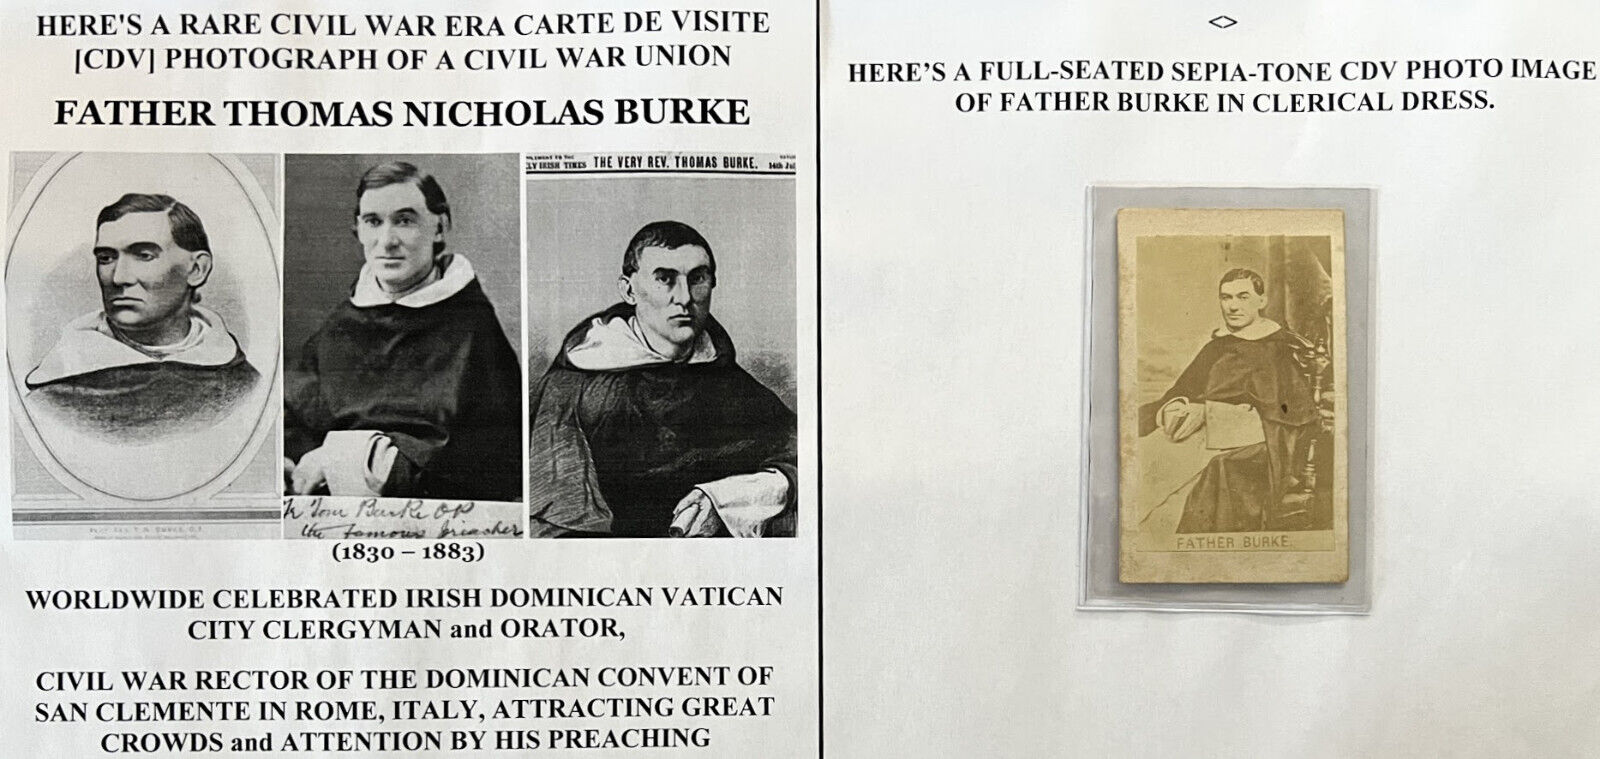 CIVIL WAR ERA IRISH DOMINICAN VATICAN ROME CLERGY ORATOR FATHER BURKE CDV PHOTO!